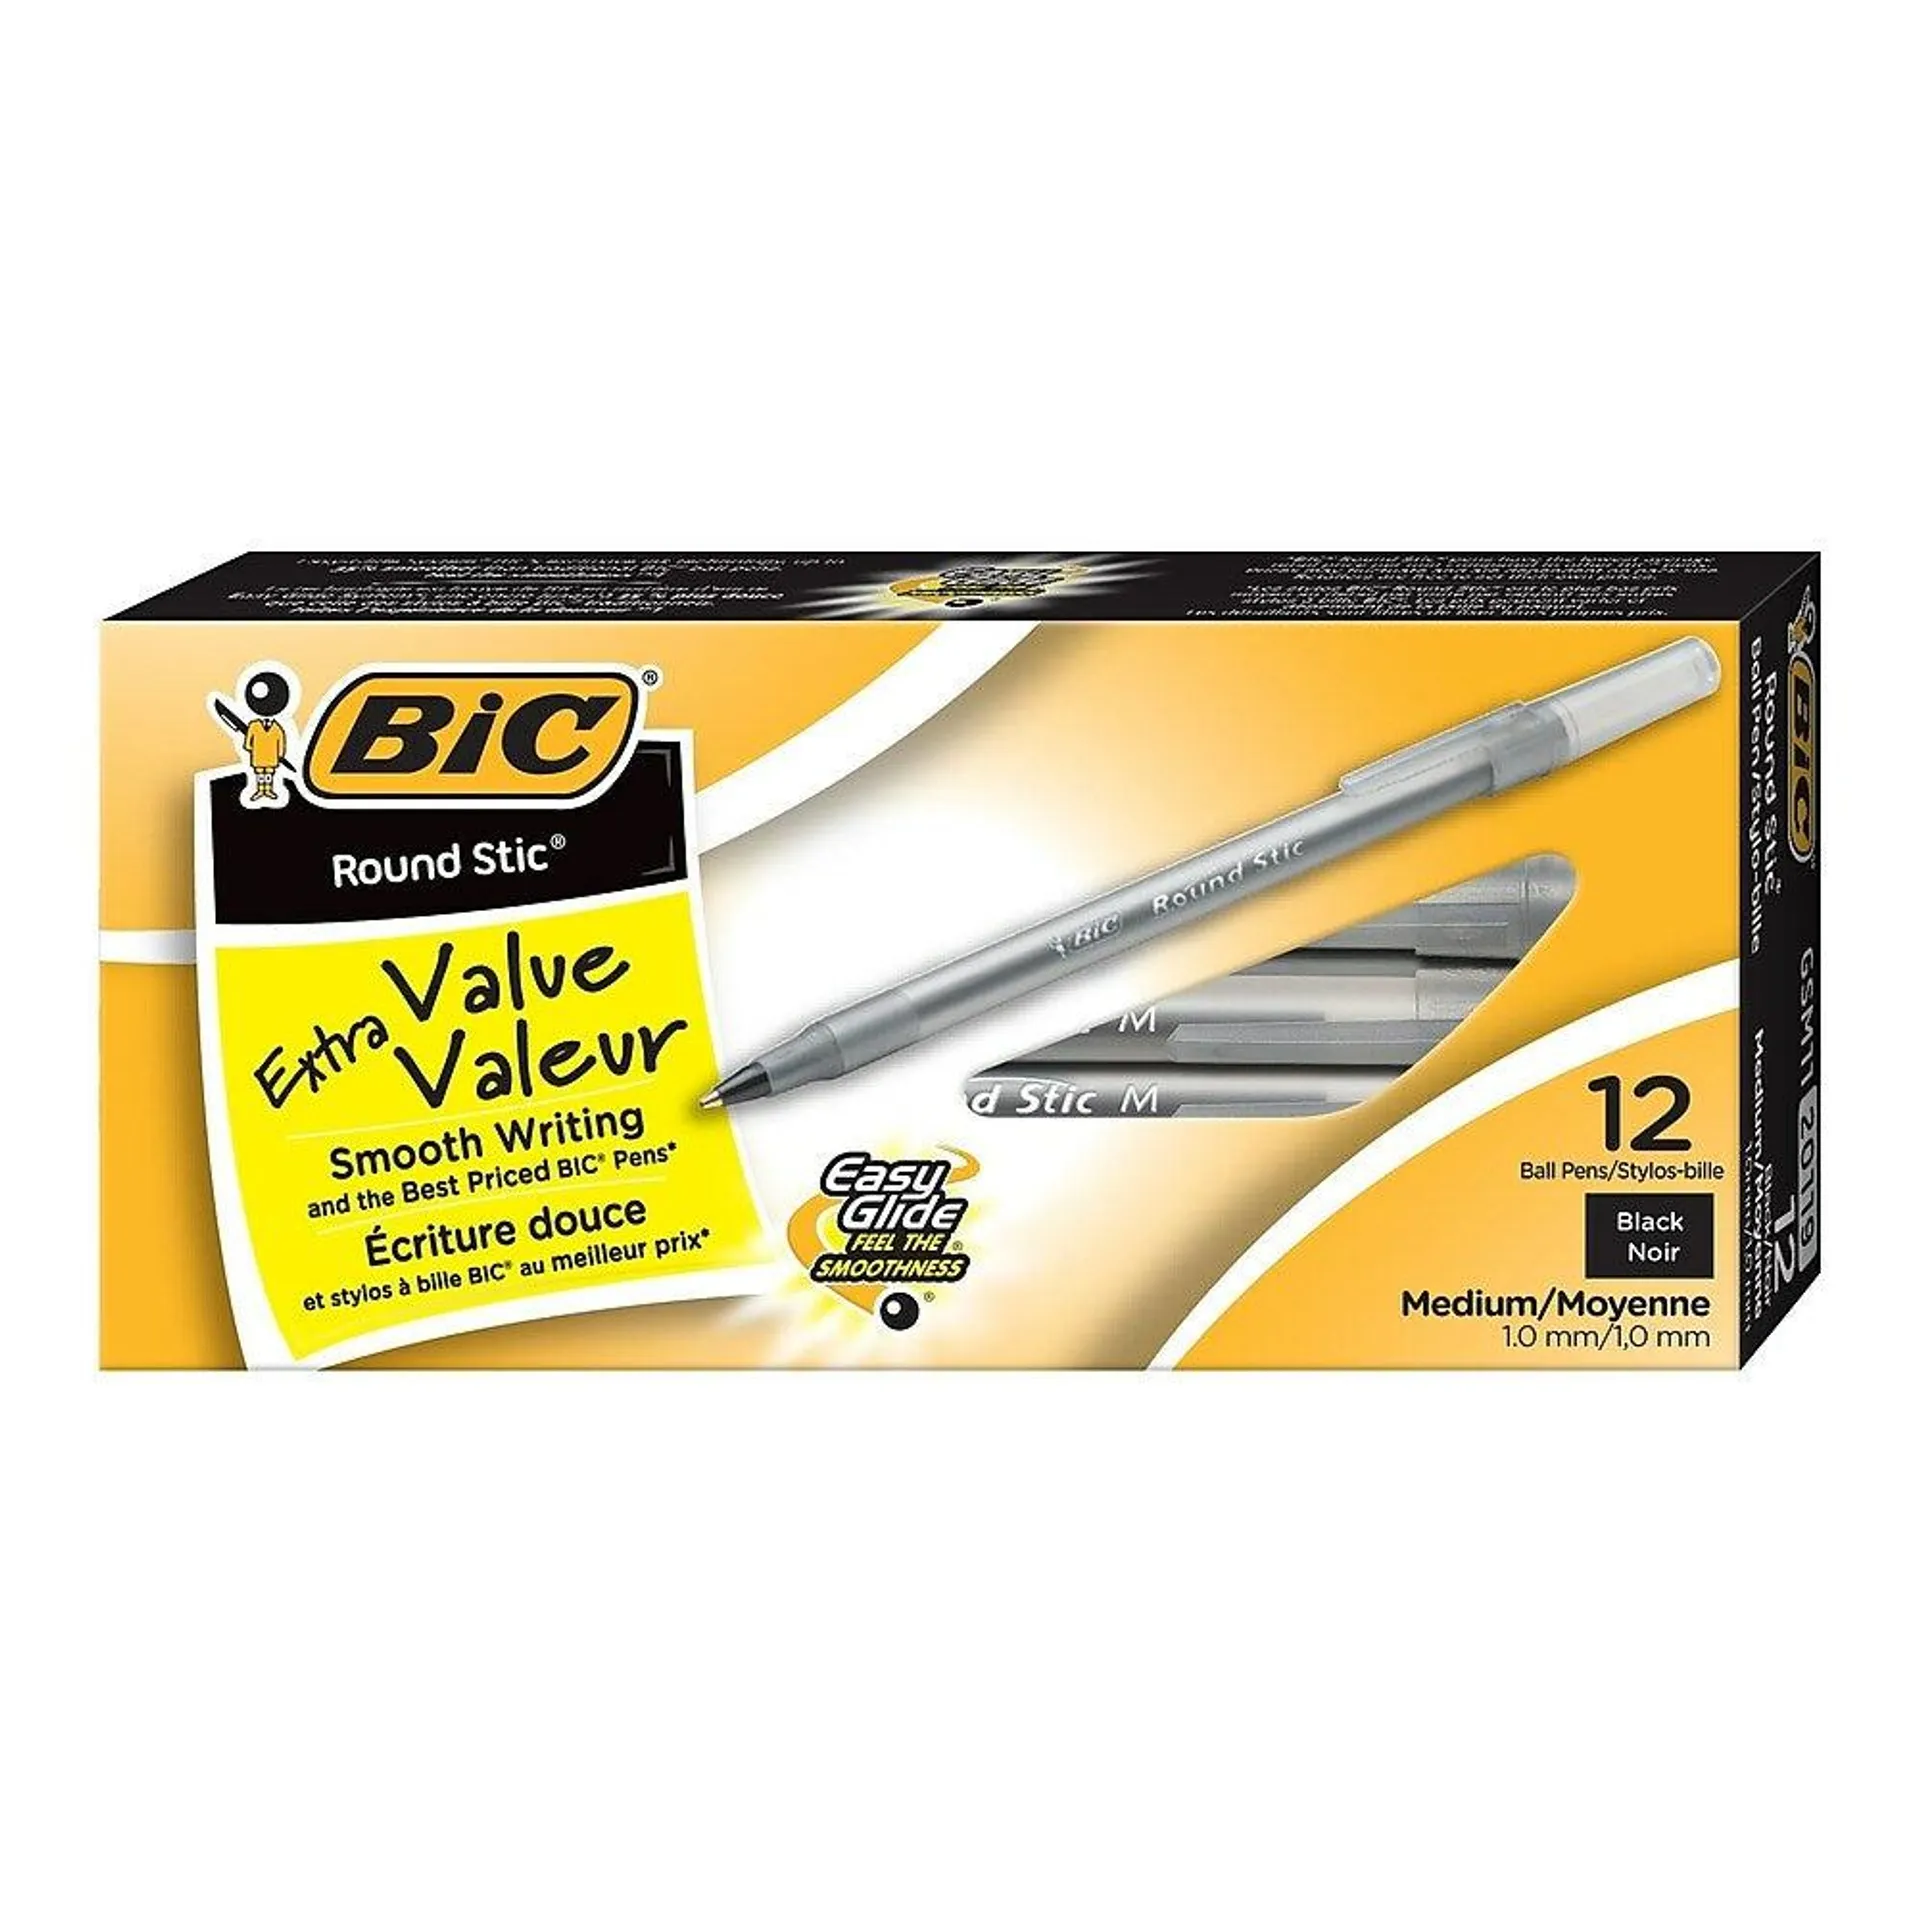 BIC Round Stic Extra Value Ballpoint Stick Pens, 1.0mm, Black, 12 Pack